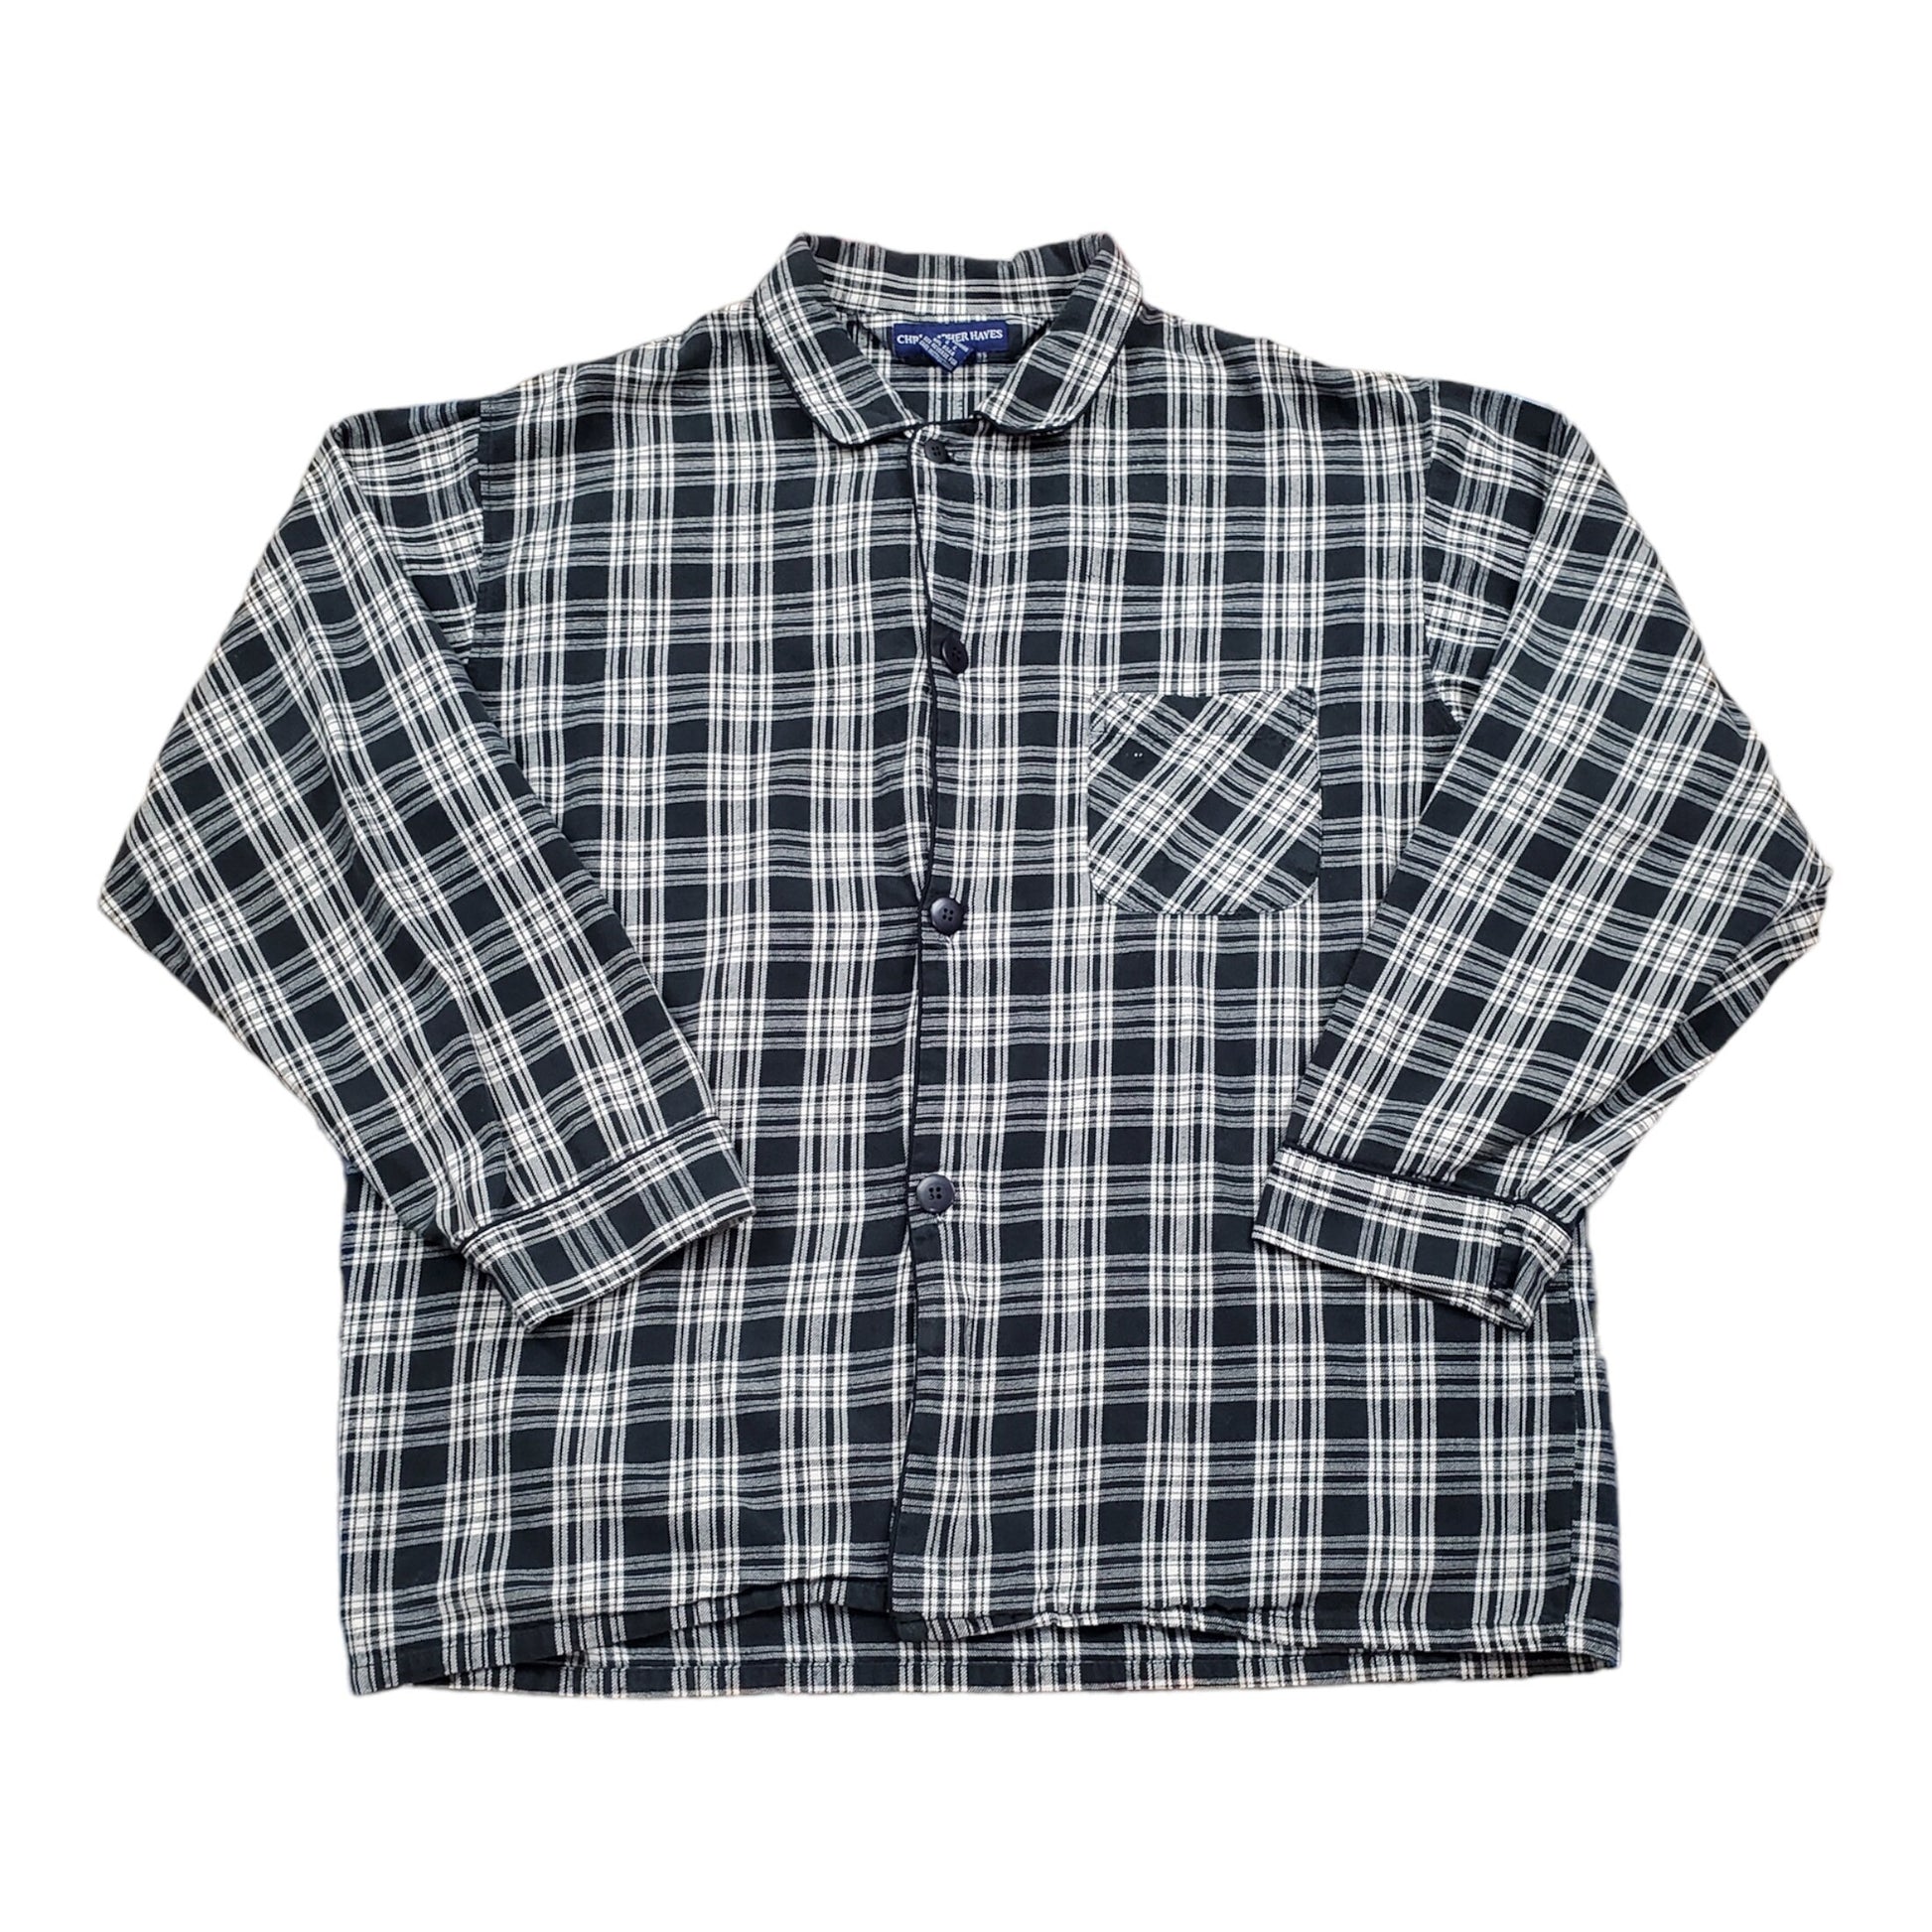 1980s/1990s Christopher Hayes Plaid Sleep Shirt Size L